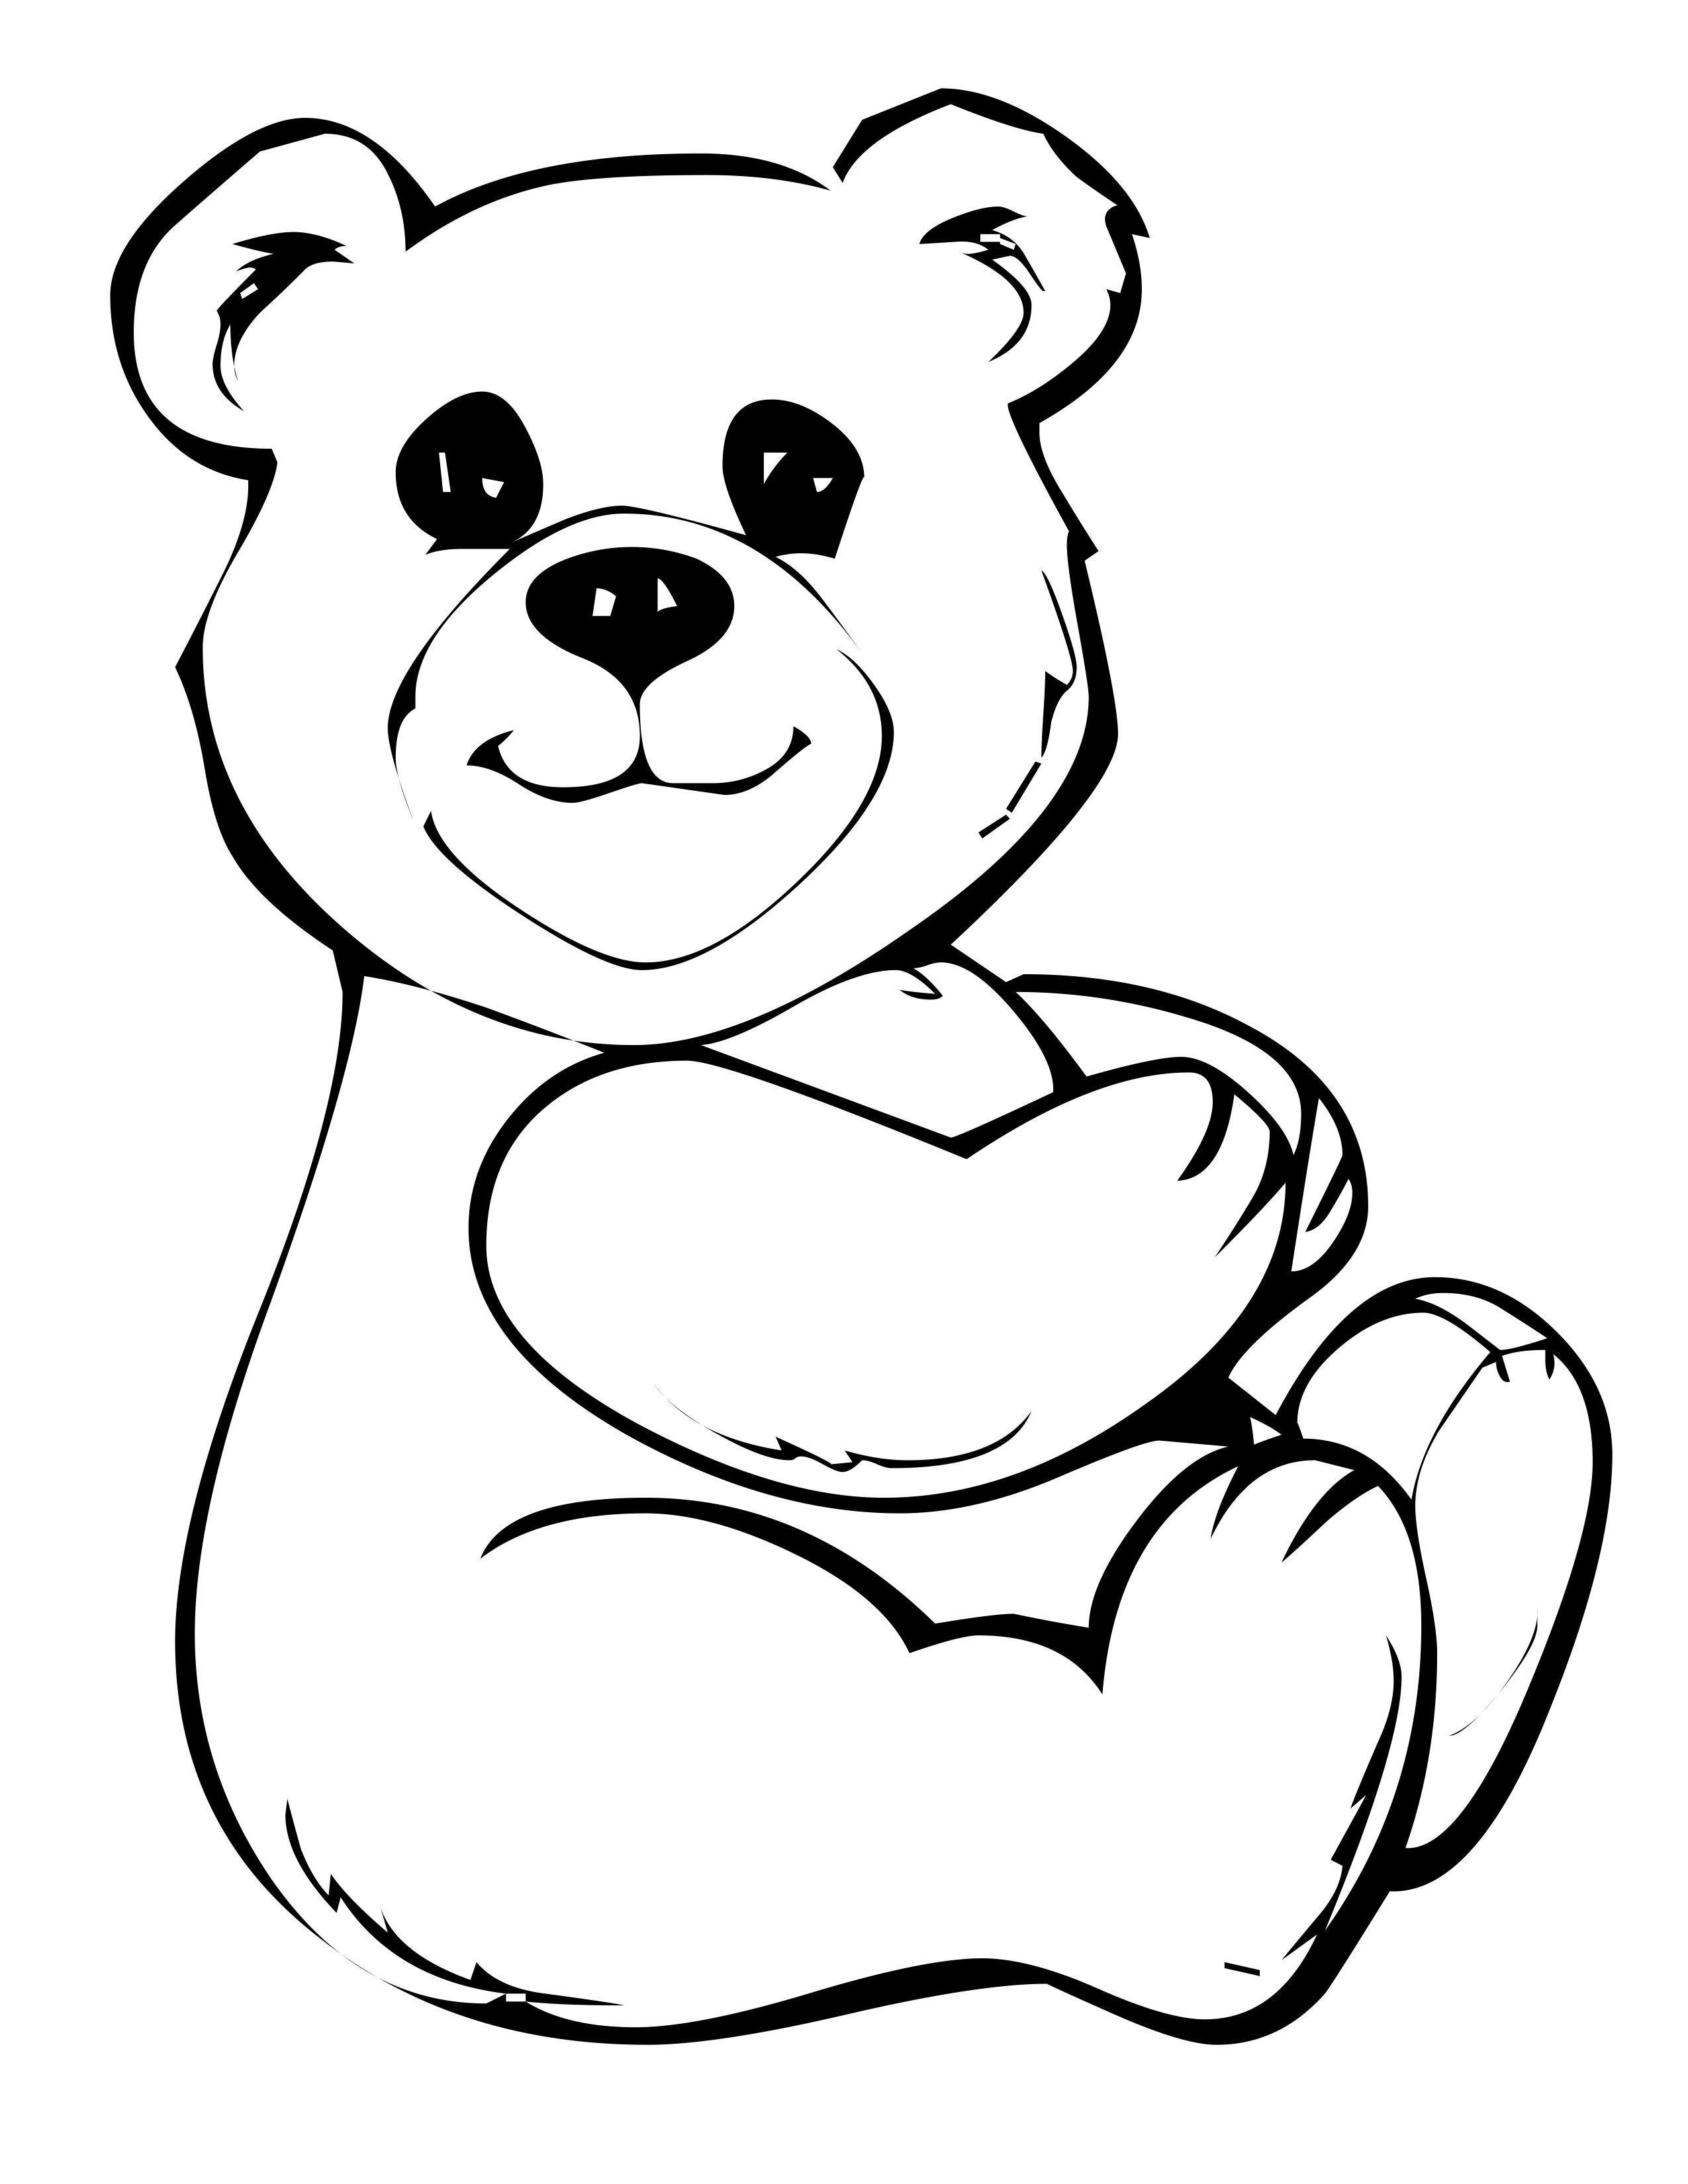 printable-teddy-bear-coloring-pages-printable-world-holiday